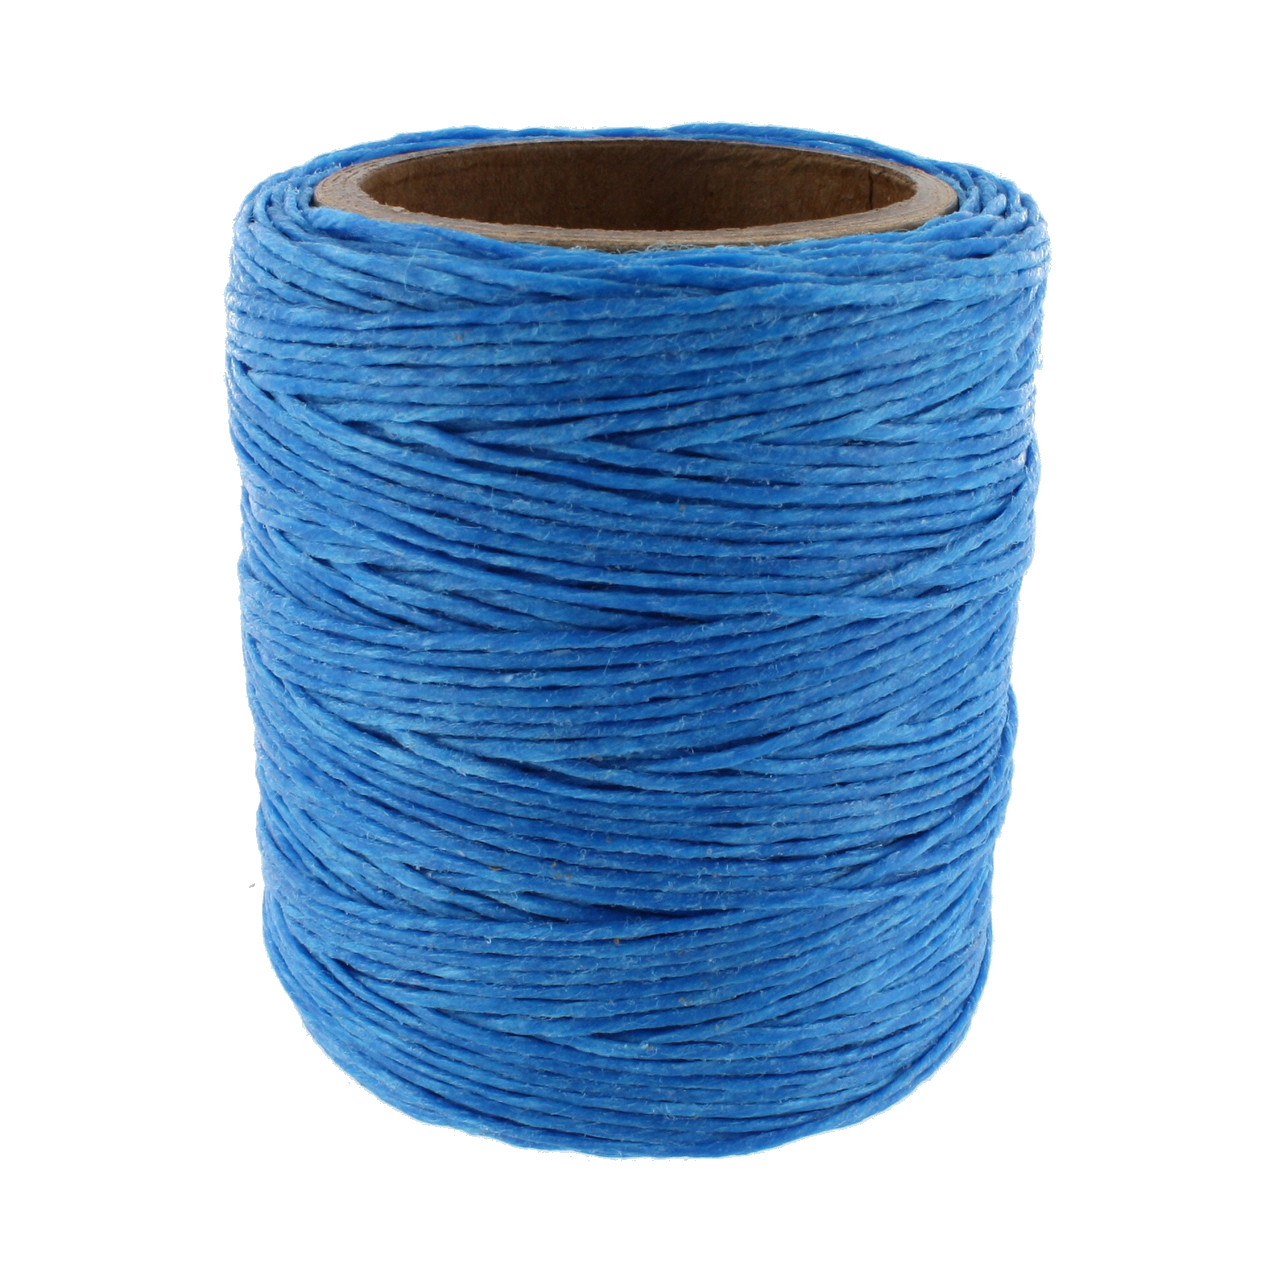 deep ocean blue waxed Brazilian cord, knotting twine, craft cord